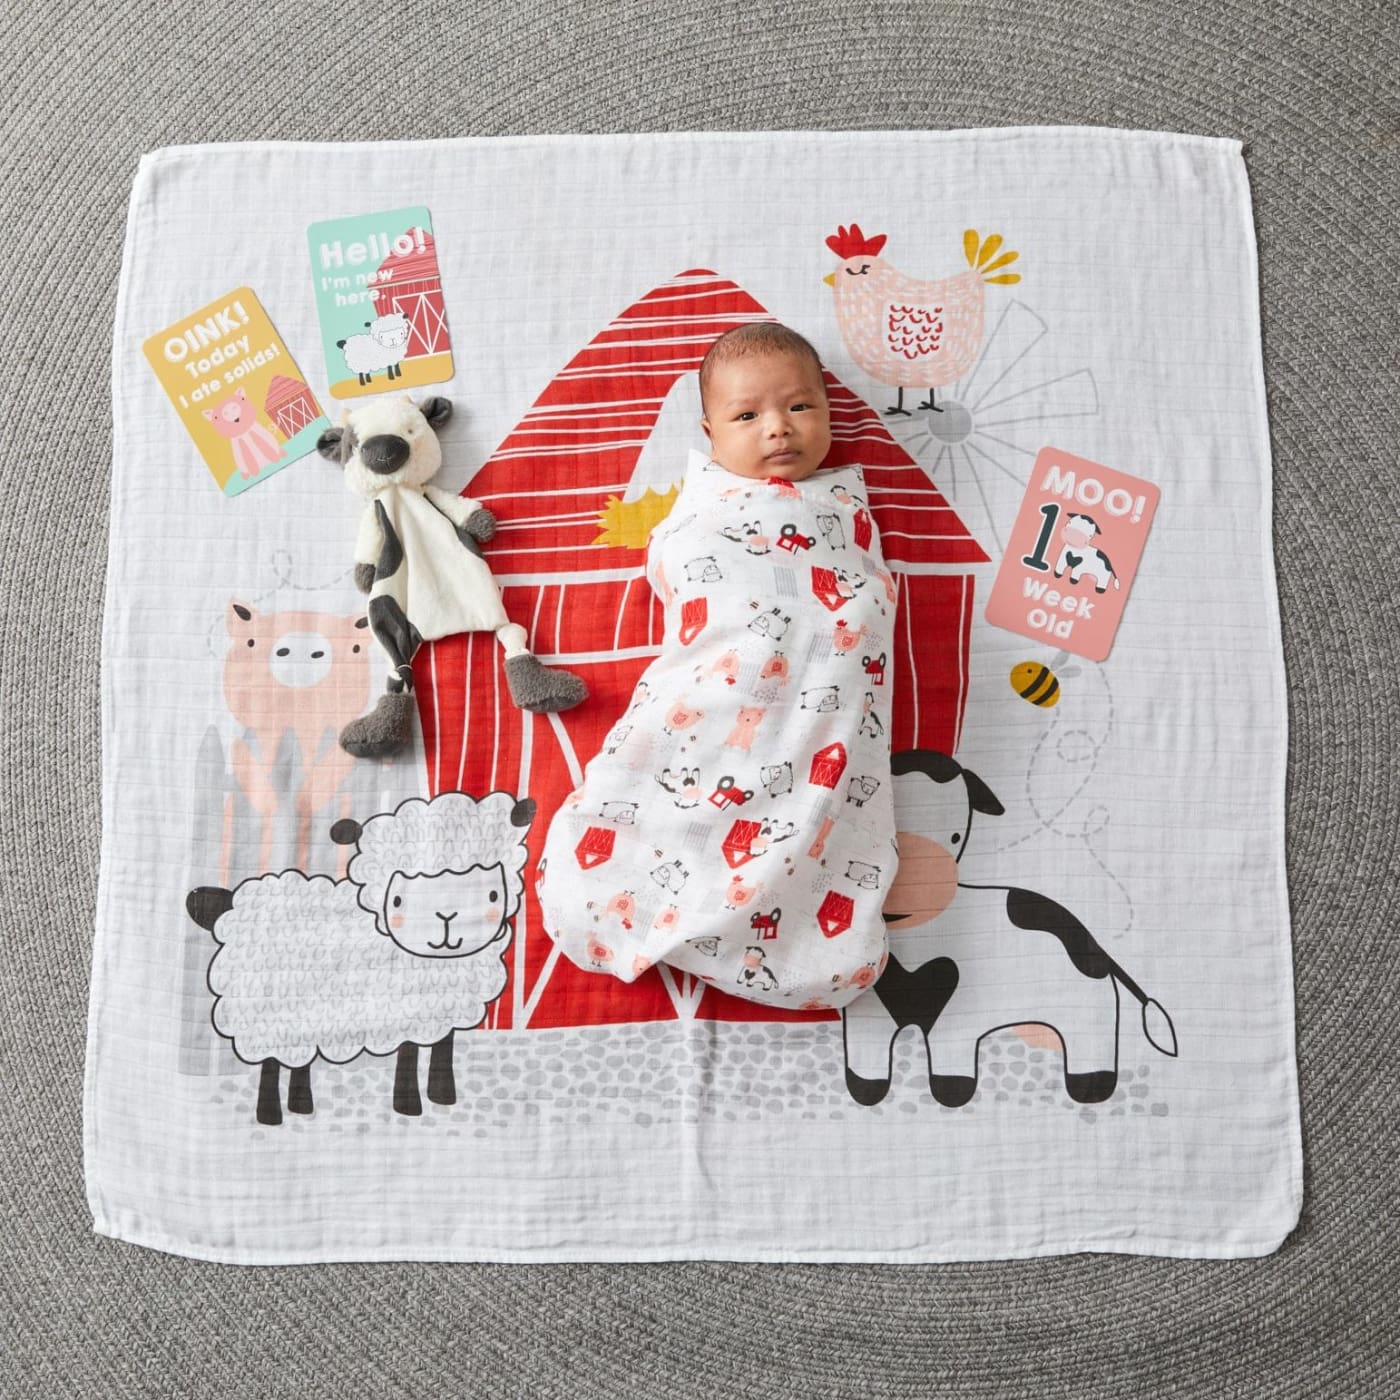 Jiggle & Giggle Milestone Cotton Muslin & Baby Photo Cards - Farm Animals - Farm Animals - GIFTWARE - MILESTONE BLOCKS/CARDS